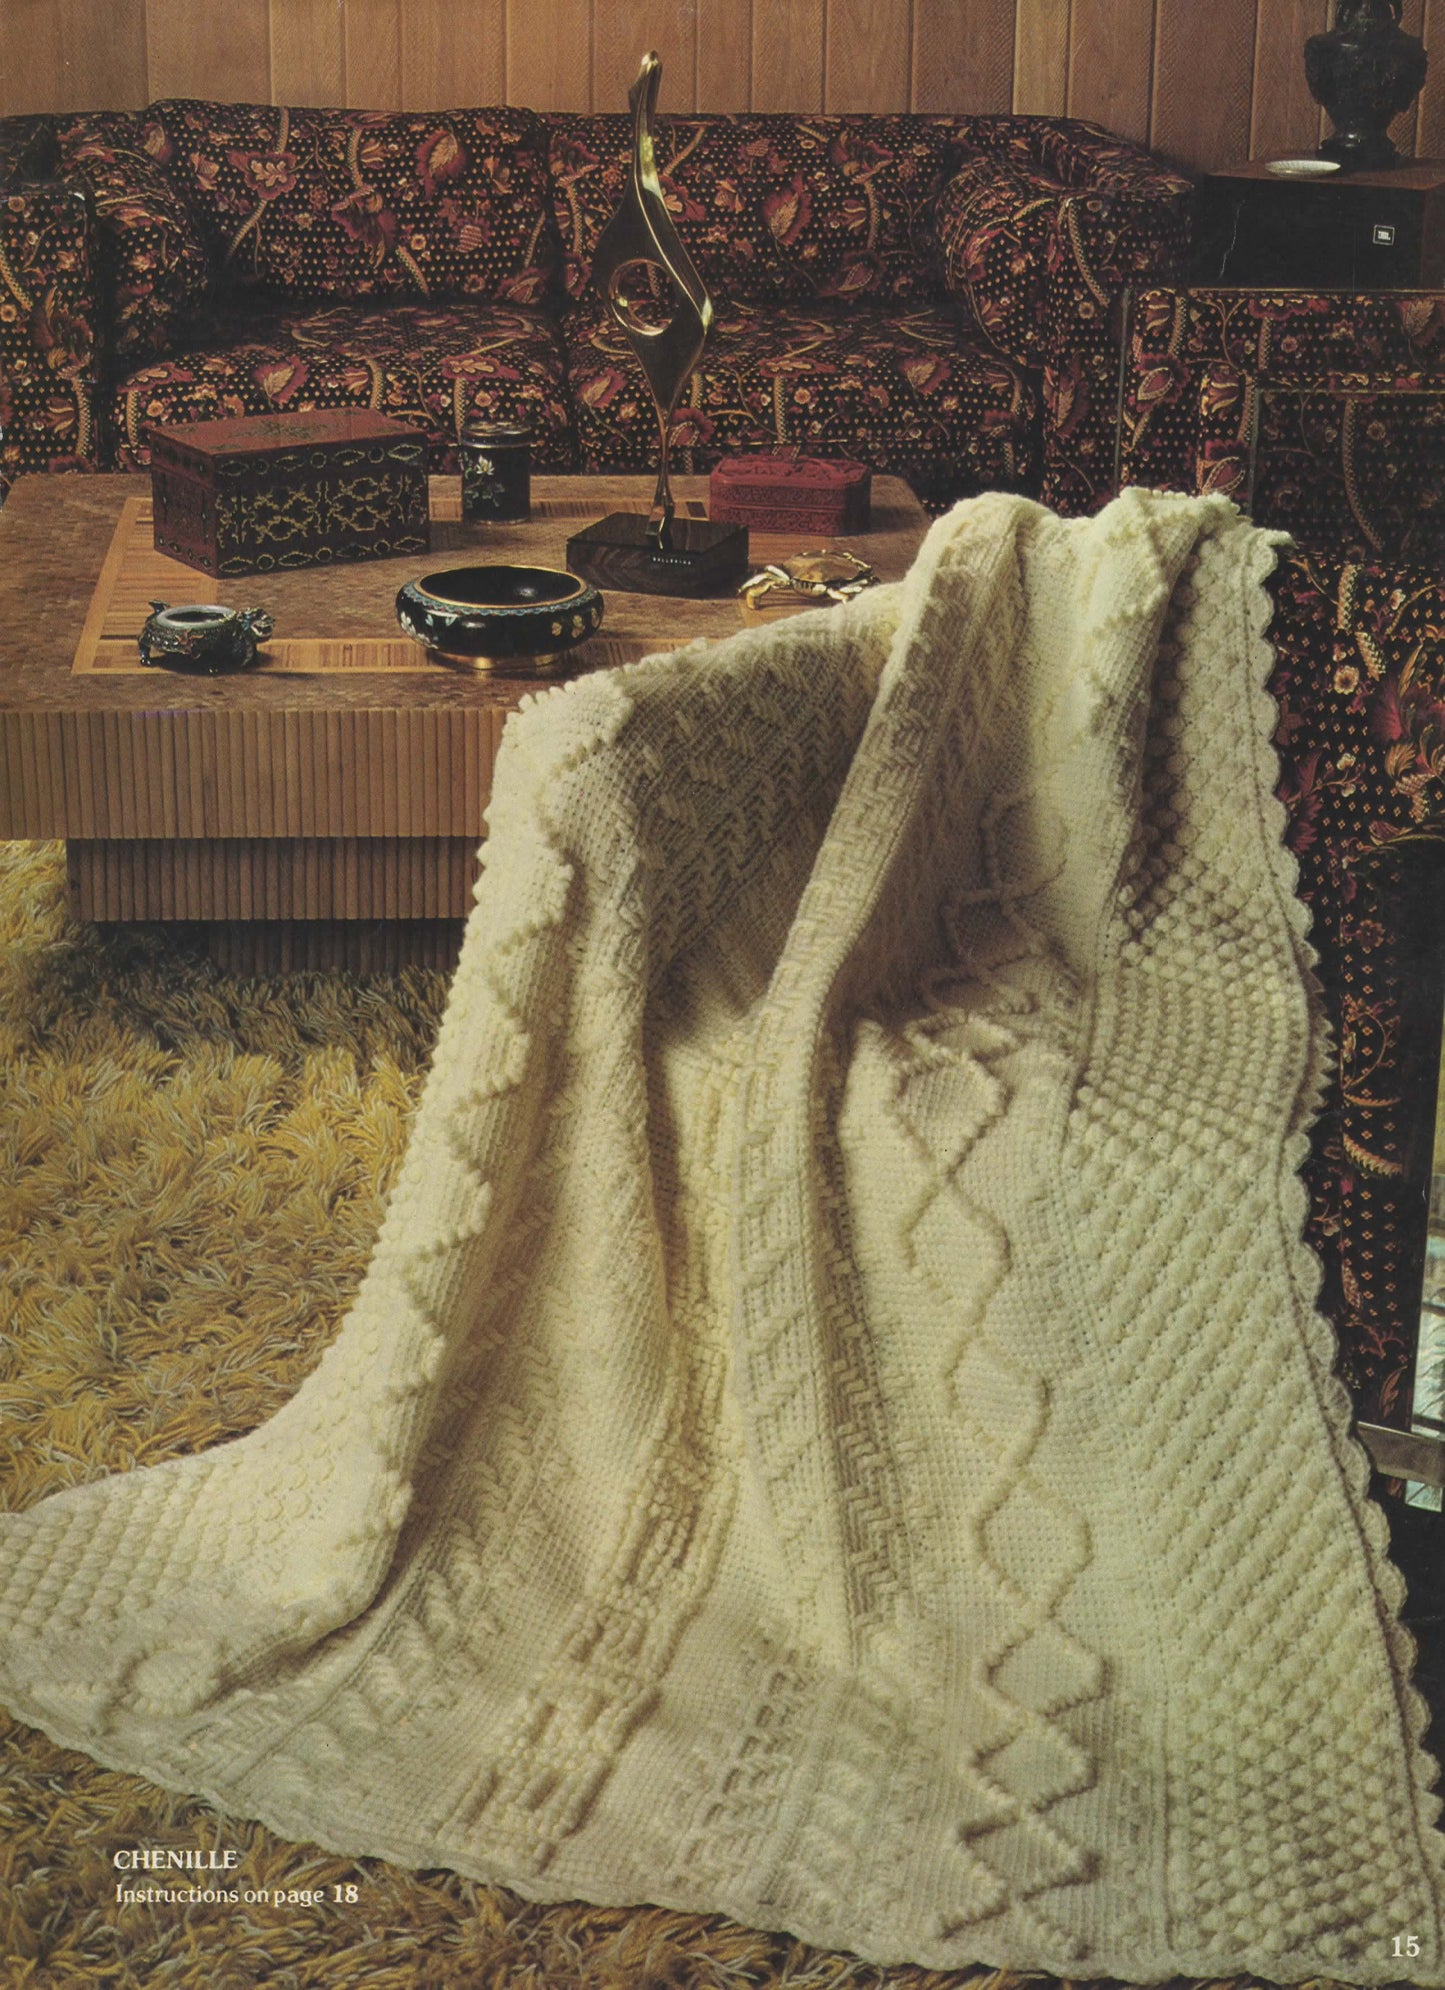 Vintage Crochet Pattern Chenille Afghan Blanket Download PDF - At Grandma's Table